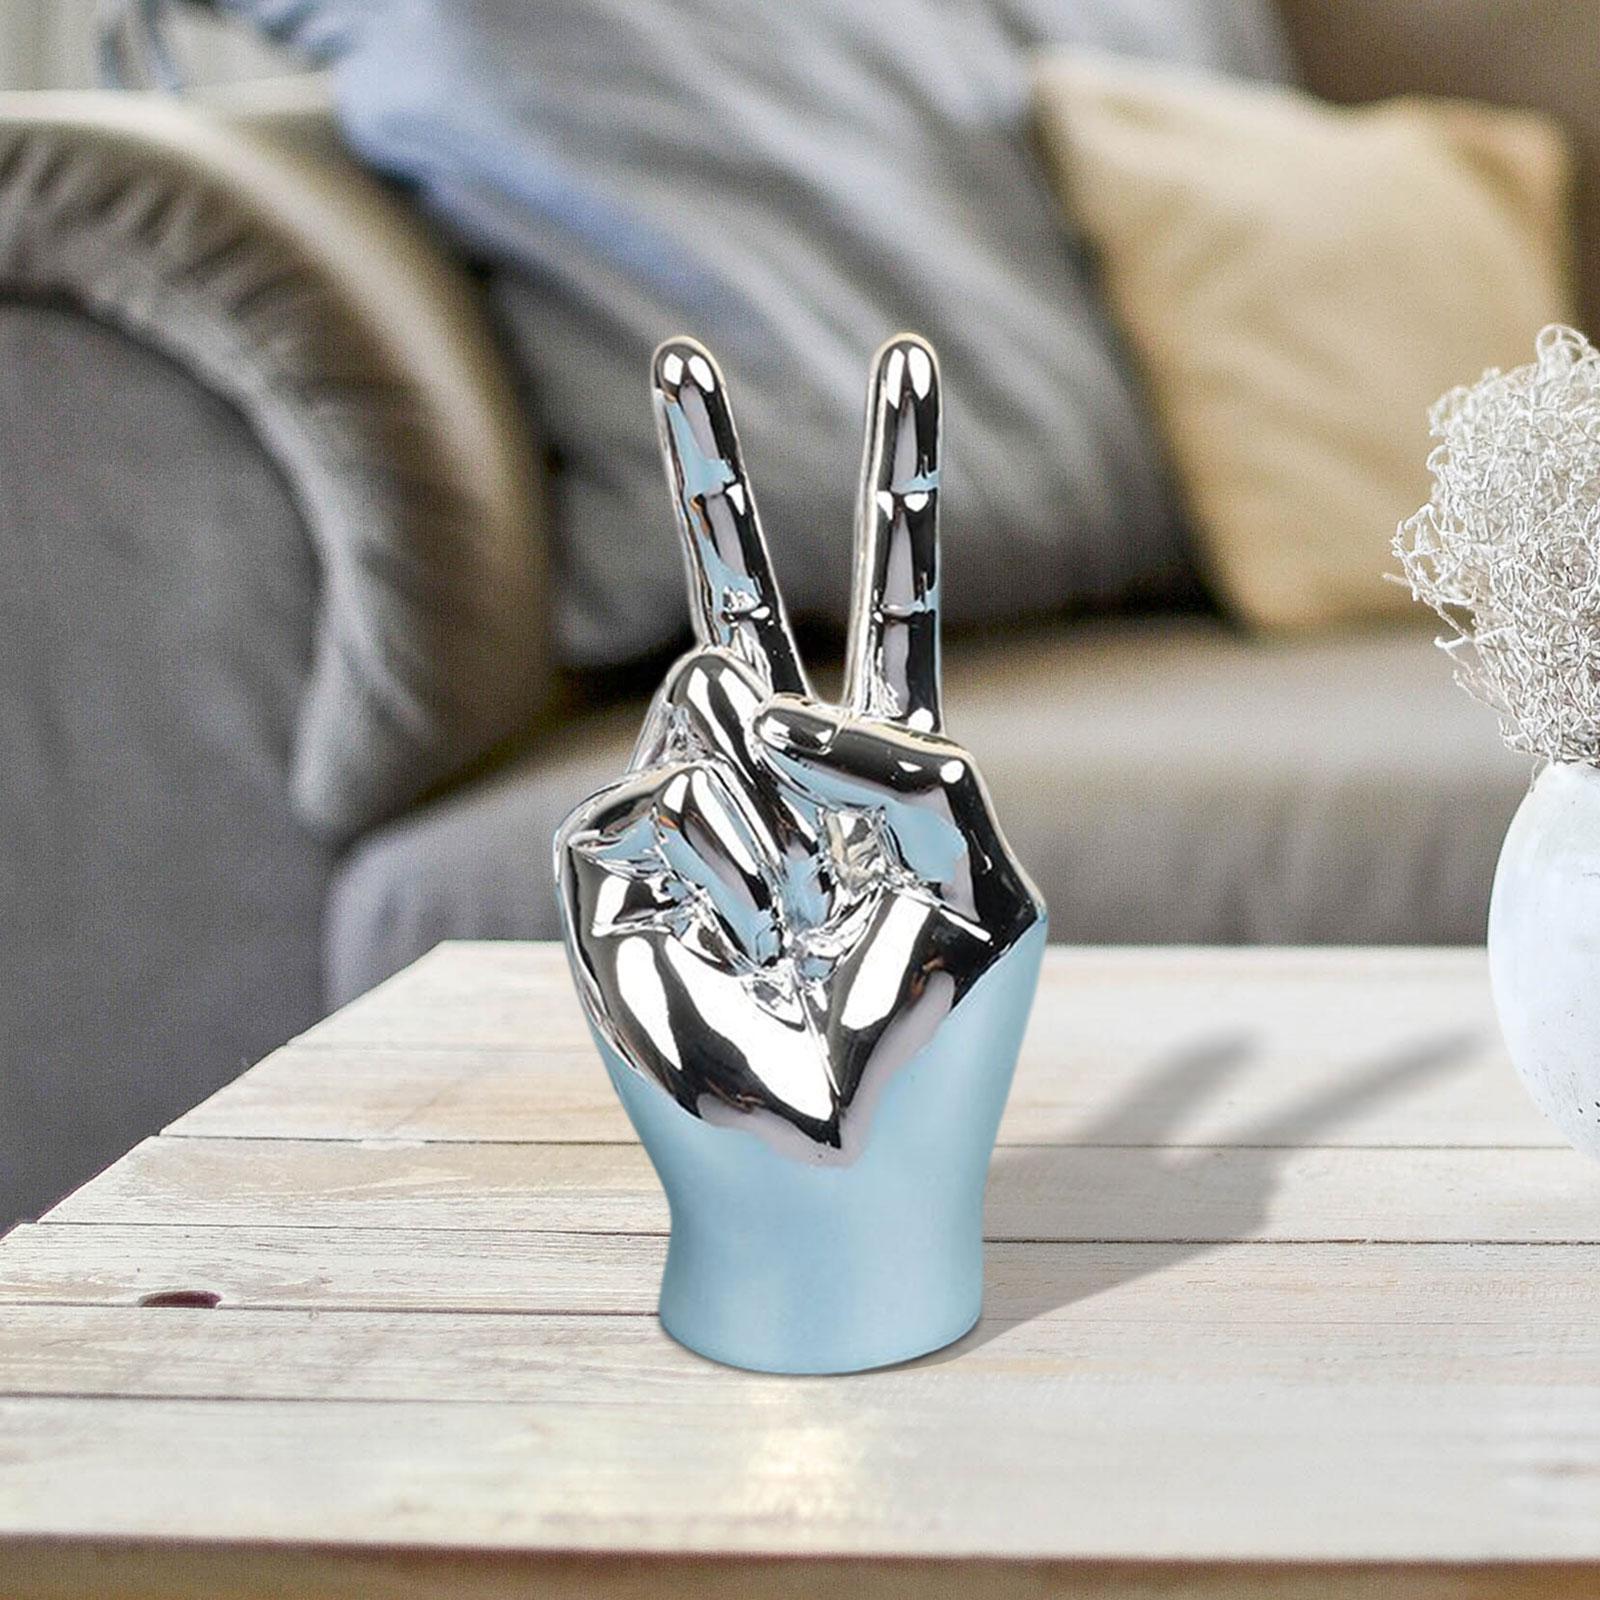 Hand Gesture Statue Creative Hand Sculpture for Home Table Centerpiece Decor Peace Argent